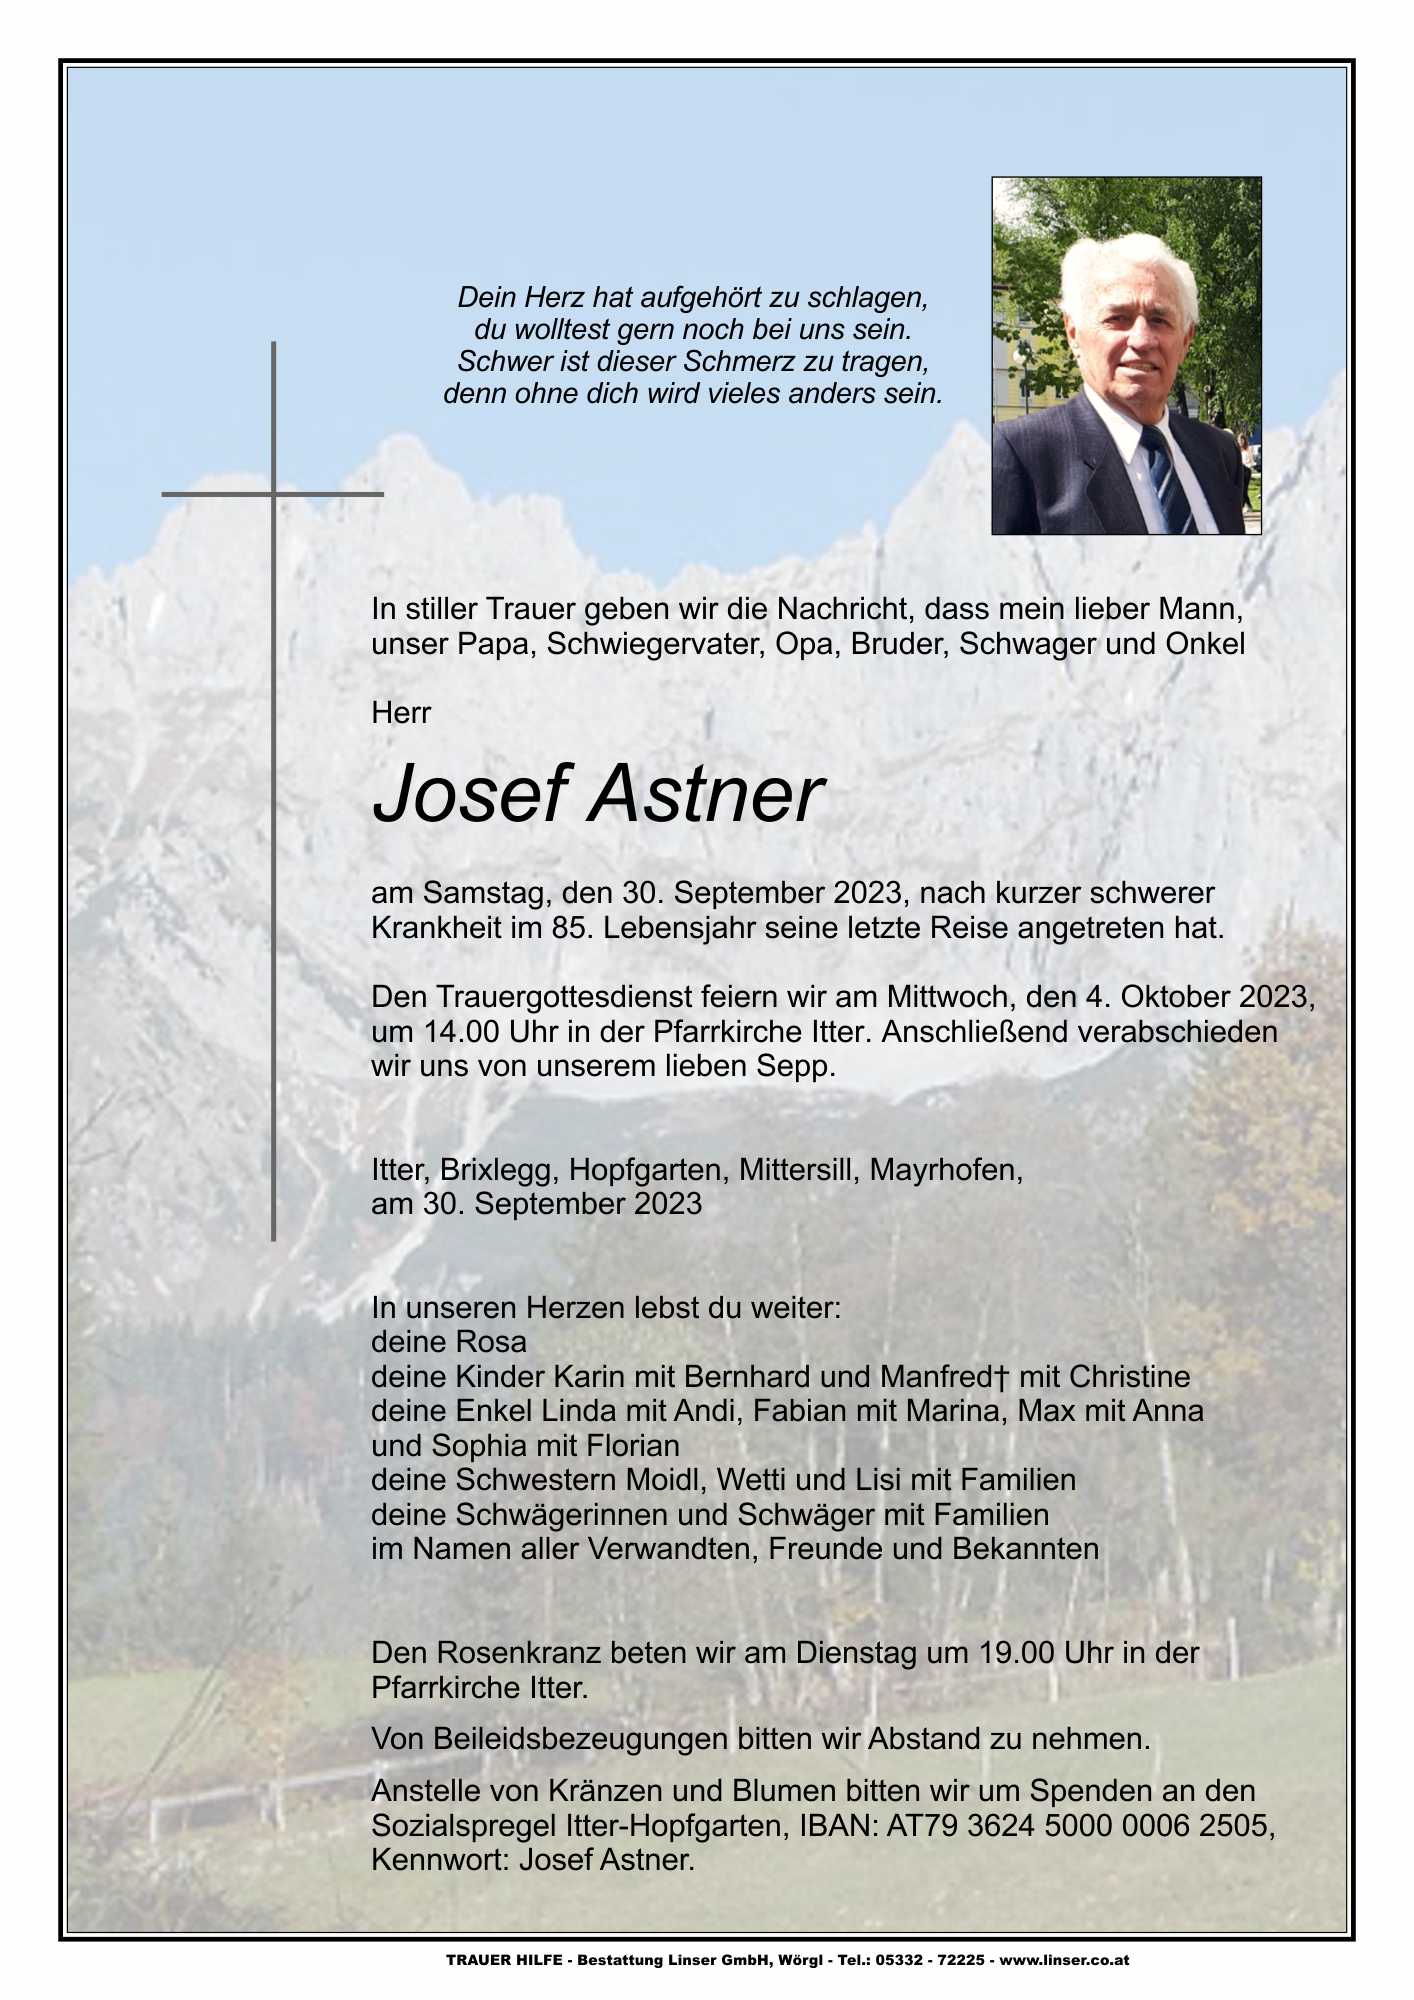 Josef Astner